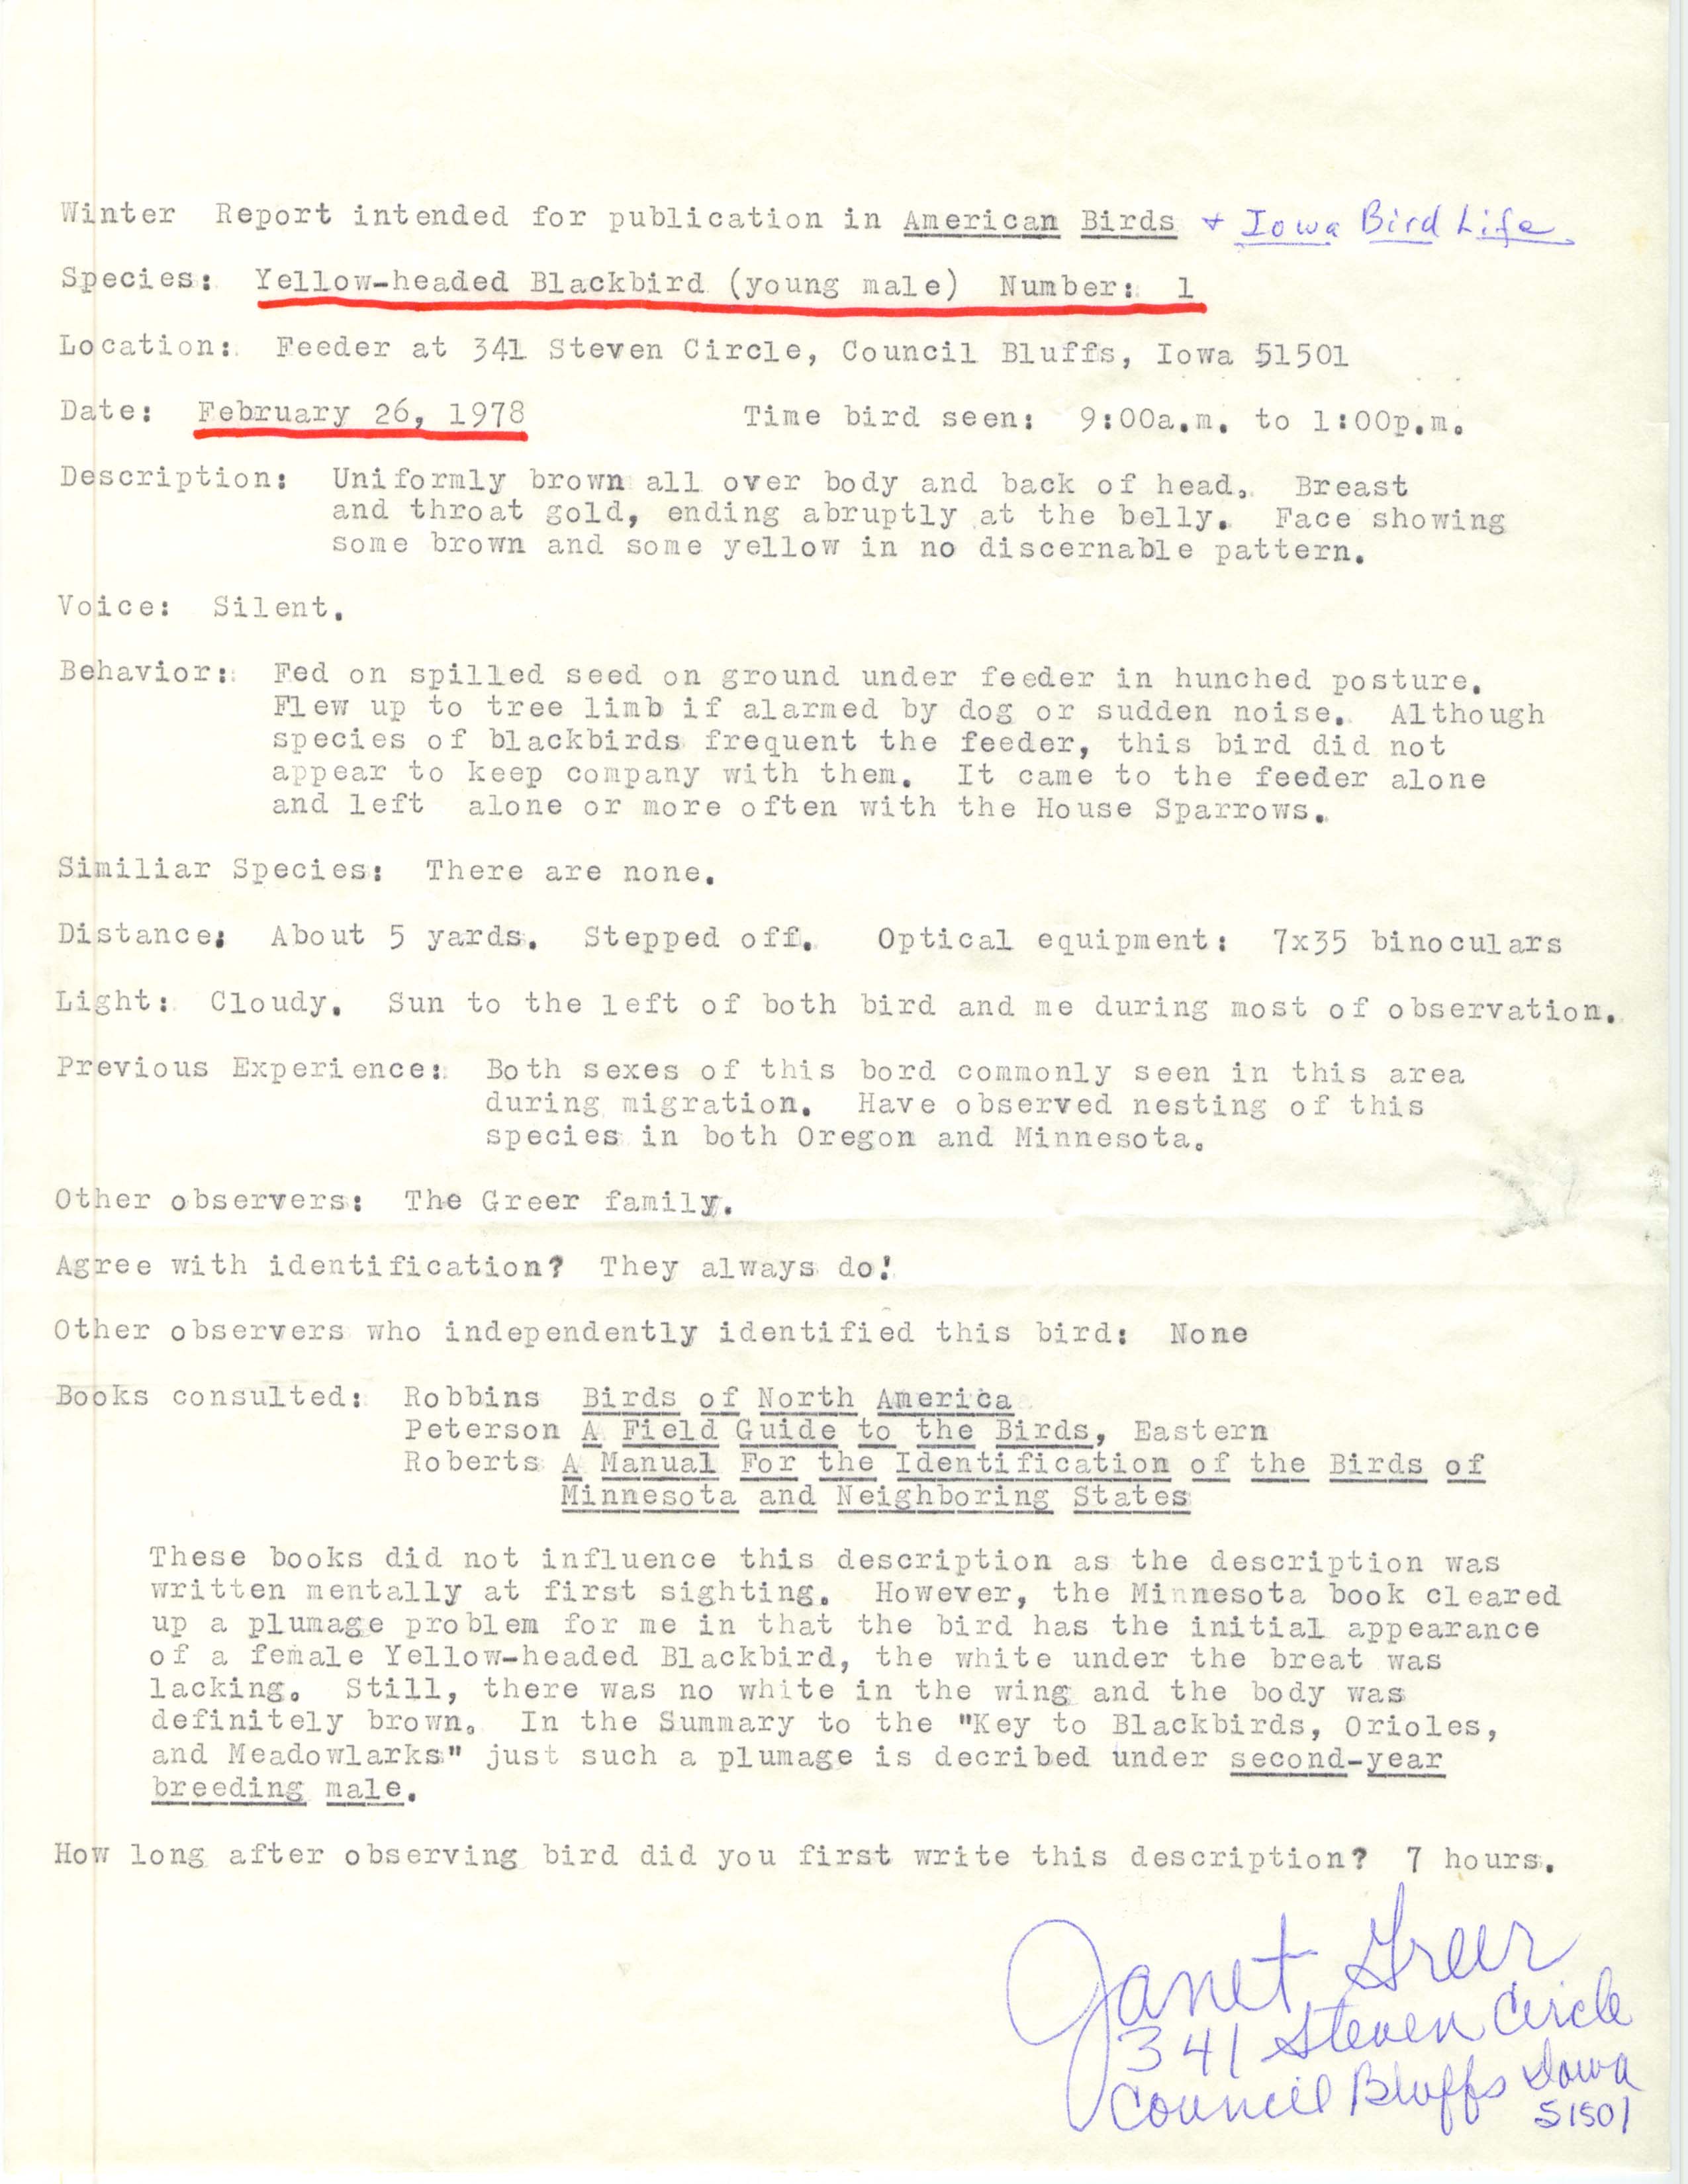 Rare bird documentation form for Yellow-headed Blackbird at Council Bluffs, 1978